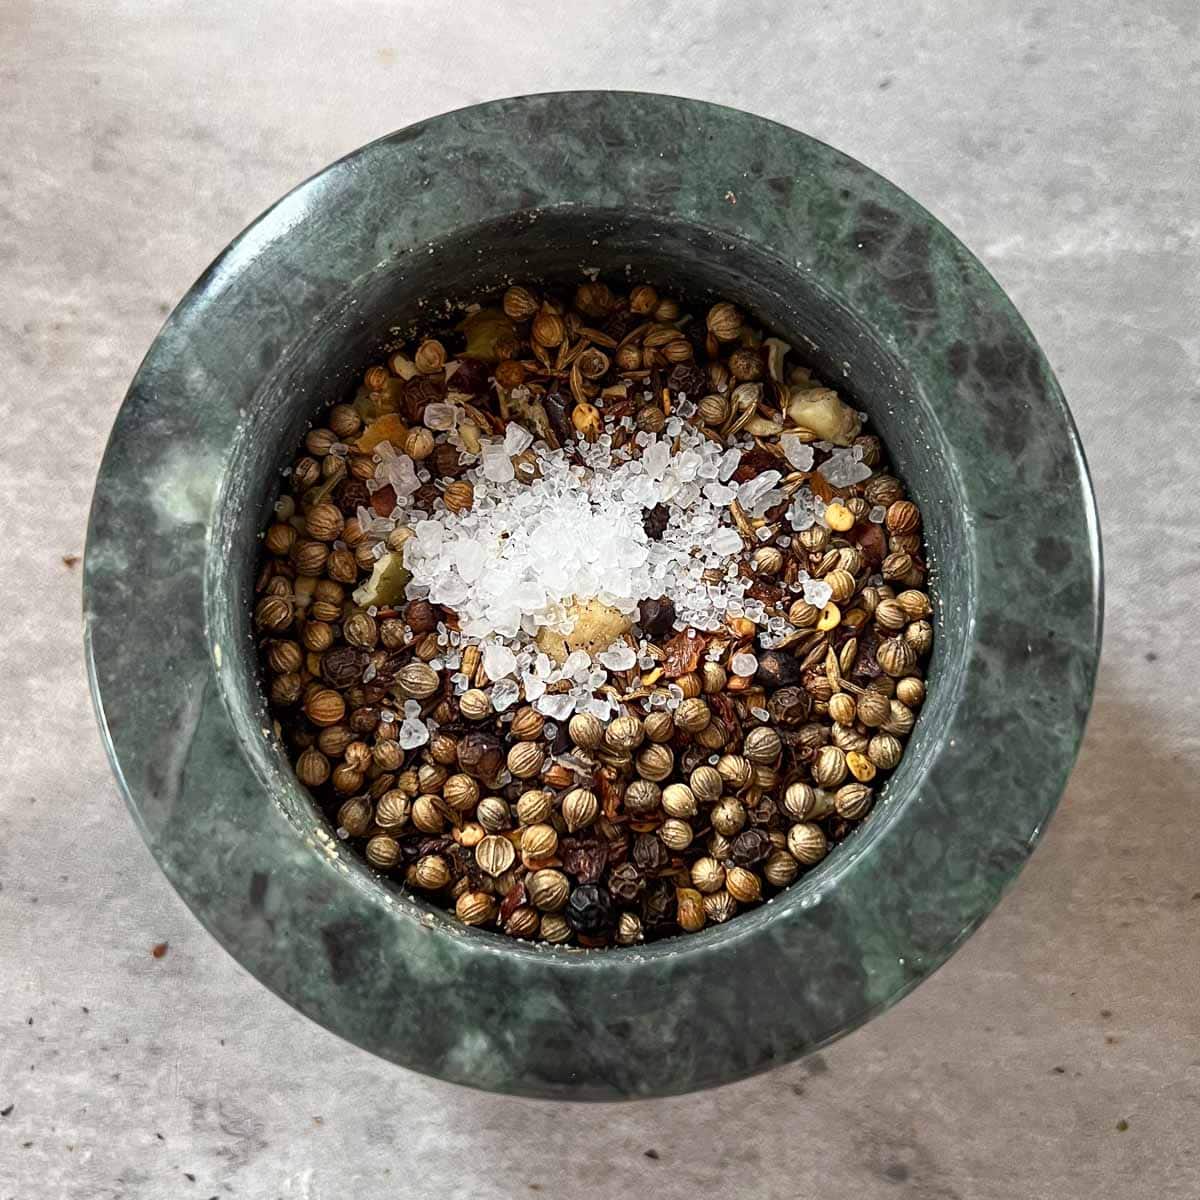 seasonings added to hazelnuts and pepitas in mortar